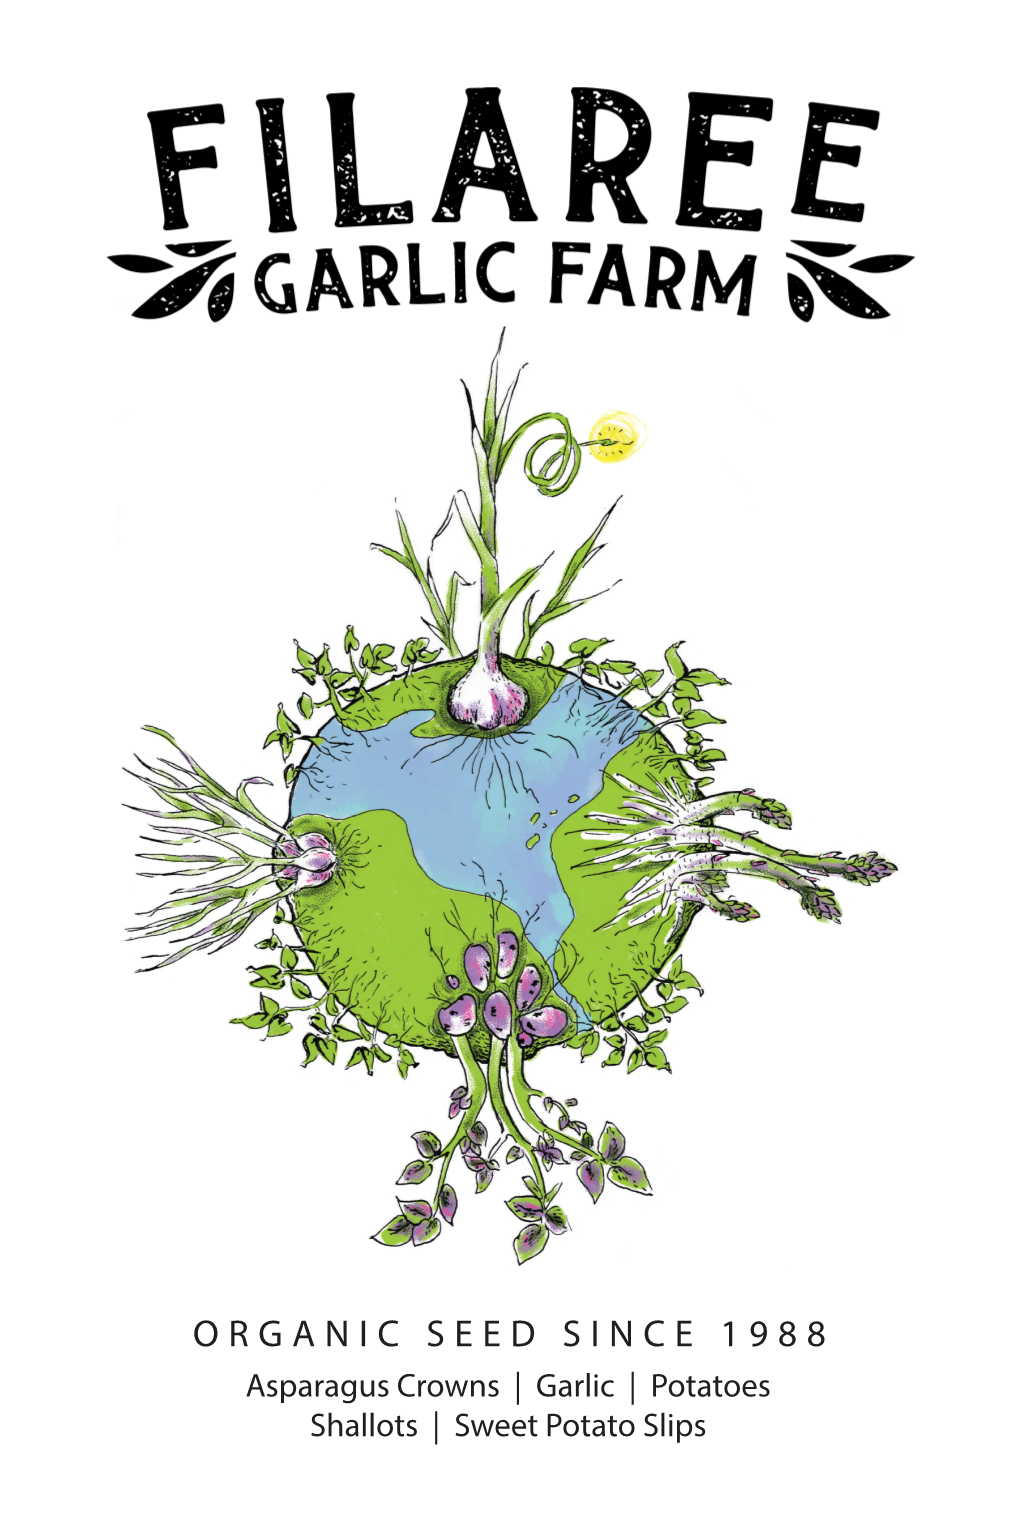 2021 Organic Seed Catalog Asparagus Crowns - Garlic - Potatoes Shallots - Sweet Potato Slips 509-422-6940 83 Epley Rd